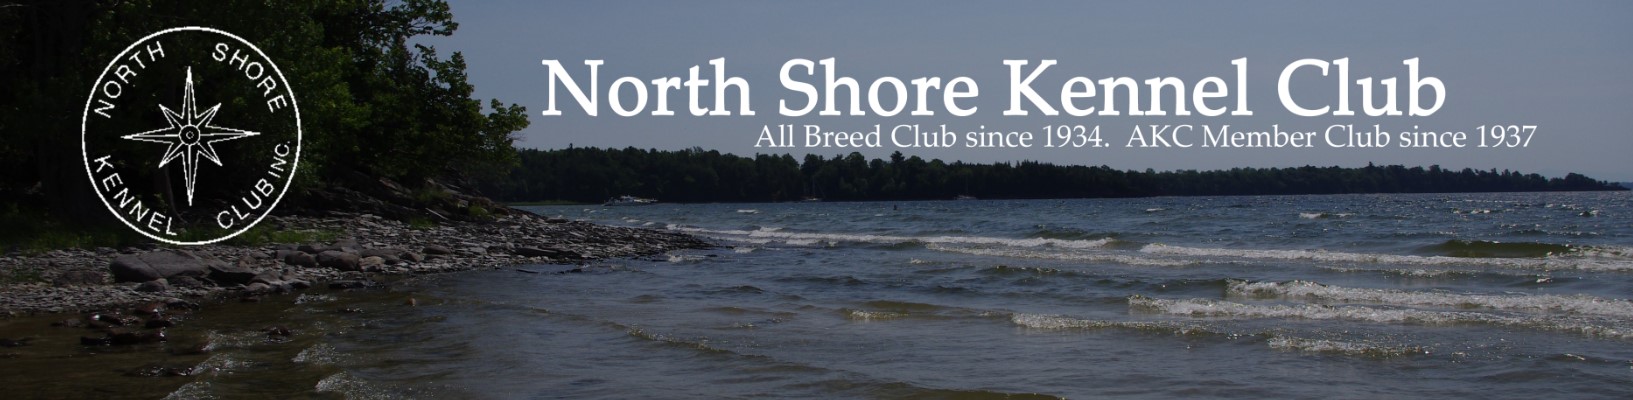 North Shore Kennel Club